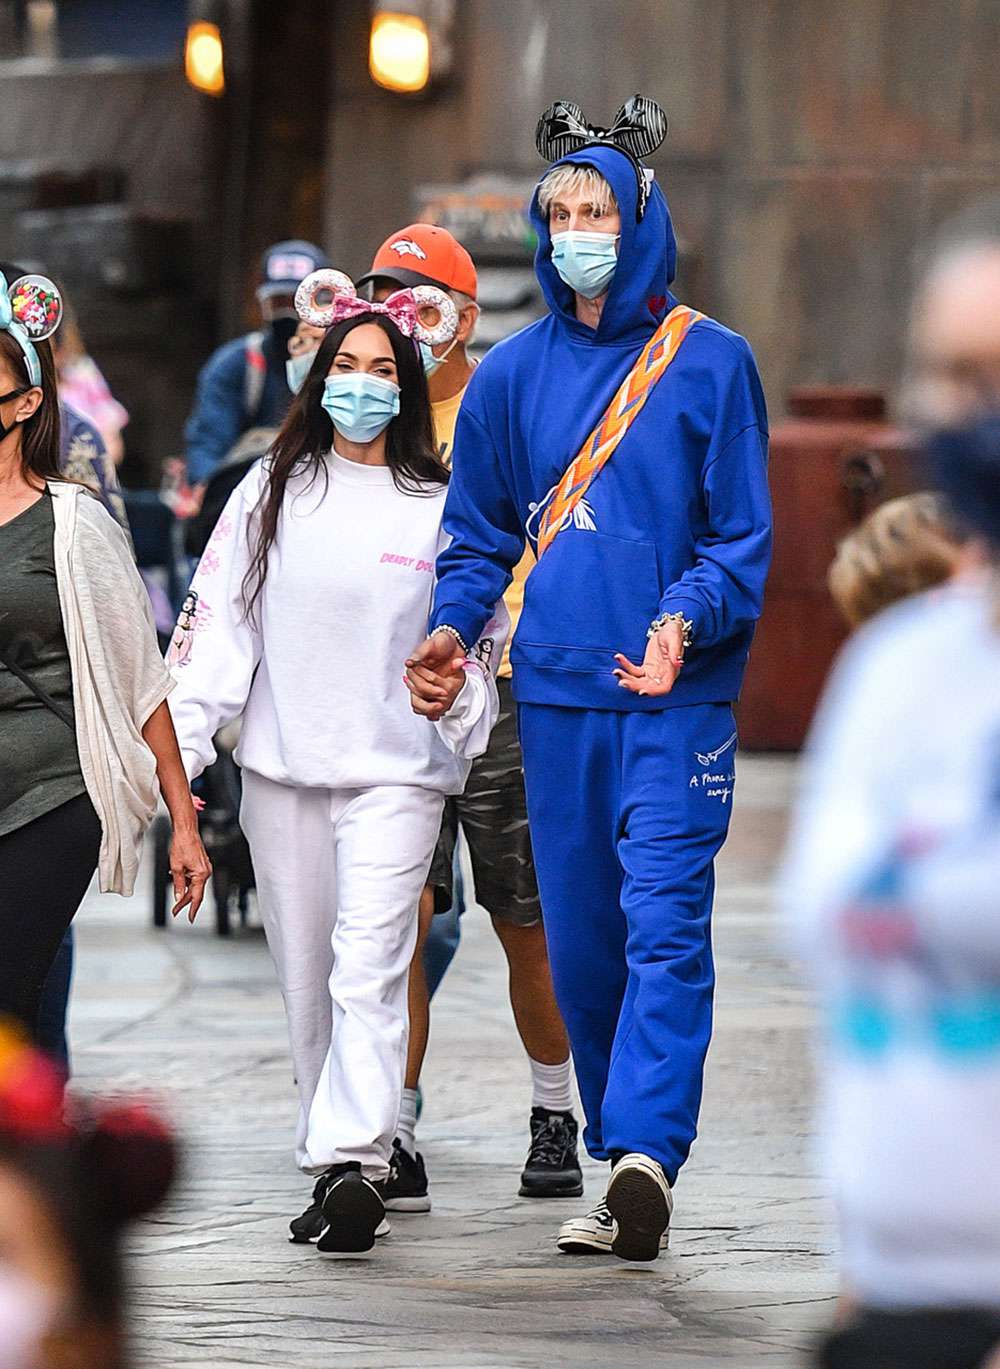 EXCLUSIVE: Megan Fox and Boyfriend Machine Gun Kelly Visit Disneyland with her parents and family in Anaheim, CA